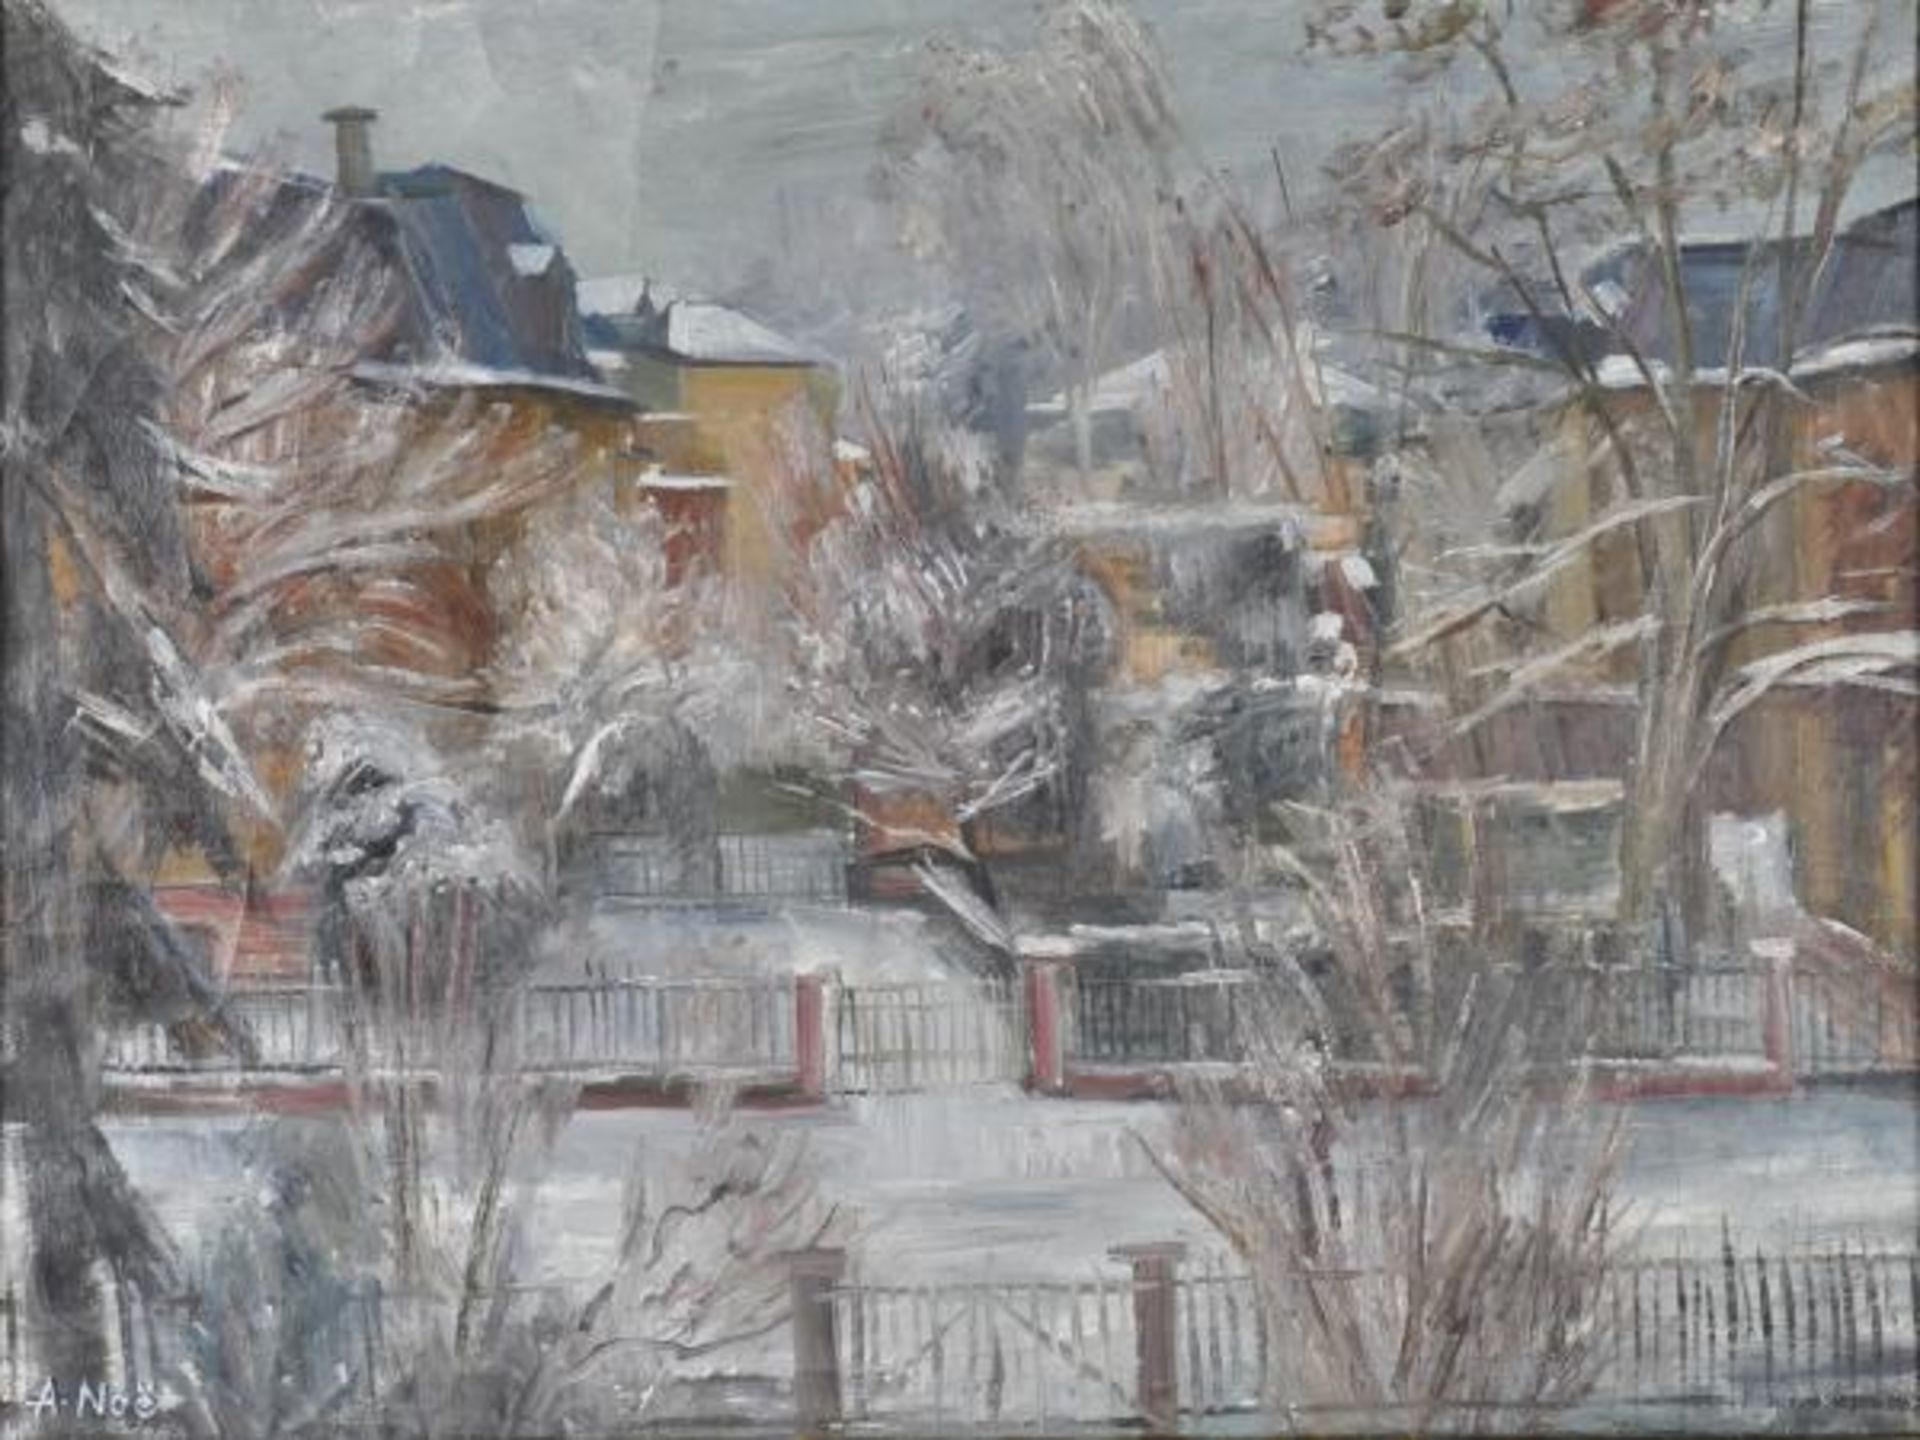 NOE Alfred (1903 Weiler/Höri - 2000 Karlsruhe) "Atelierausblick" im Winter, Blick aus dem Atelier